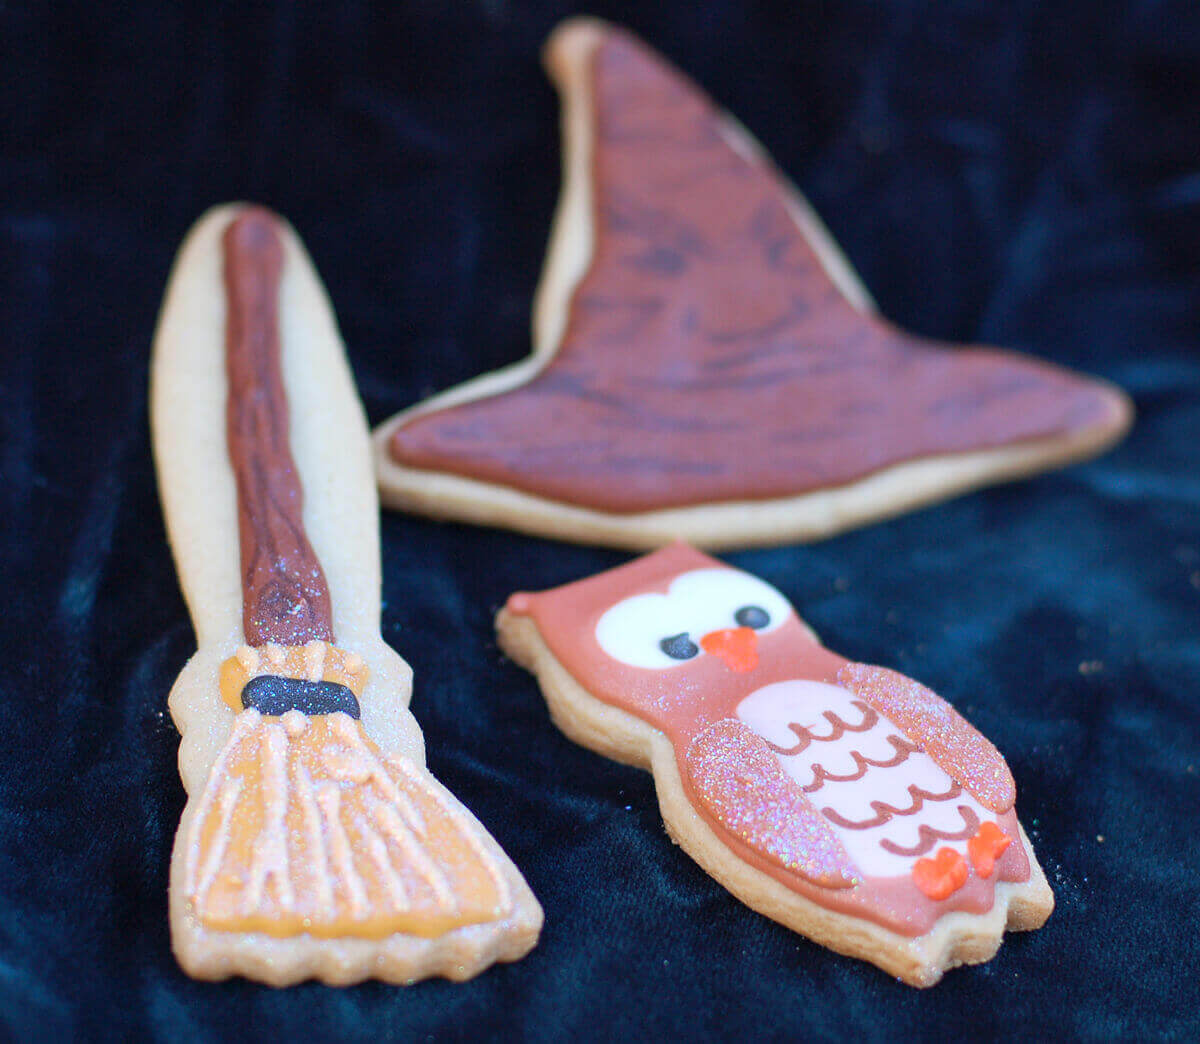 Owl, broom, and sorting hat harry potter sugar cookies on a dark blue velvet background.